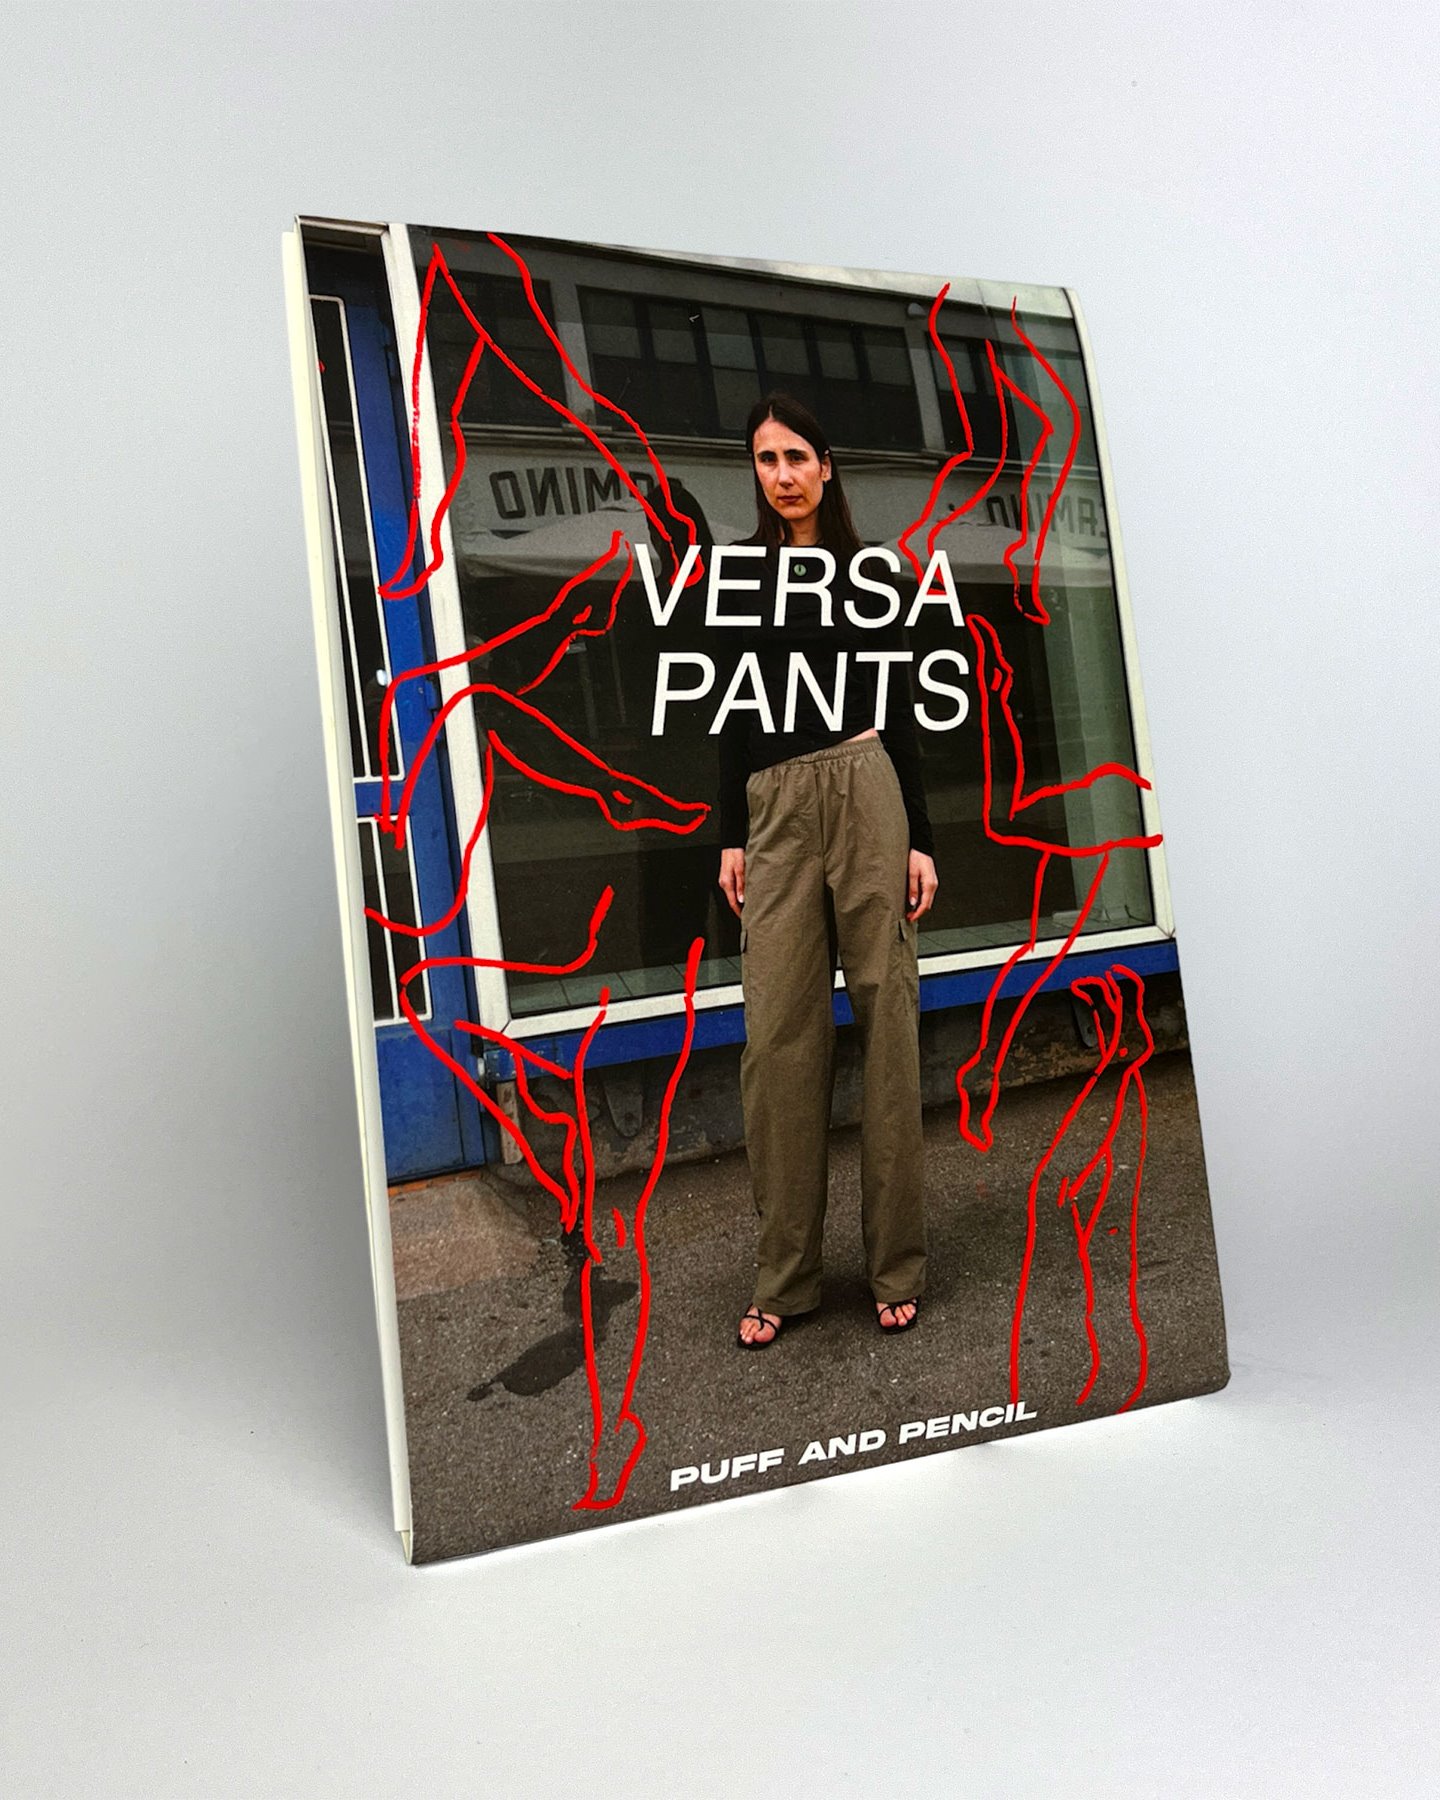 Puff and Pencil mønster "Versa pants" 1100304_pack.jpg